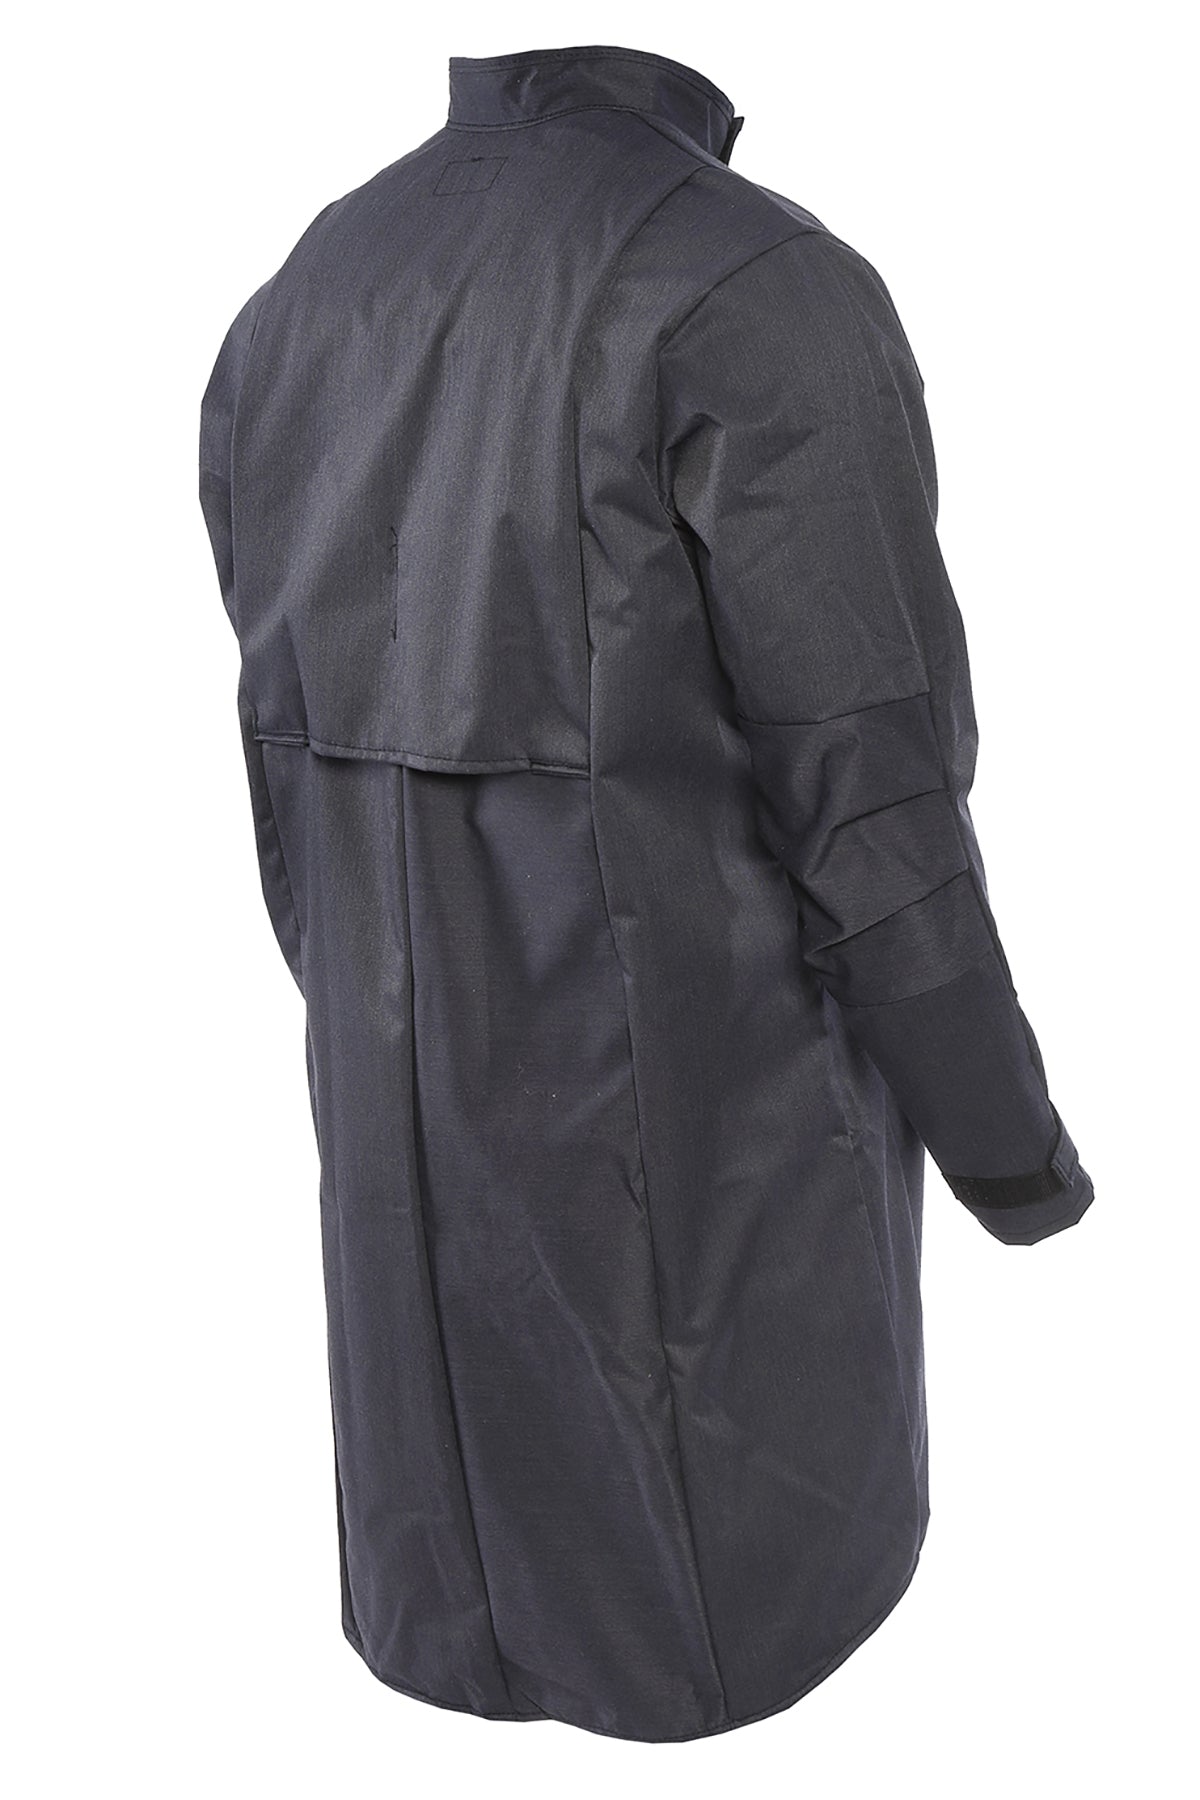 National Safety Apparel Carbon Armor N4 Molten Metal 40" Jacket, SafeGuard Technology